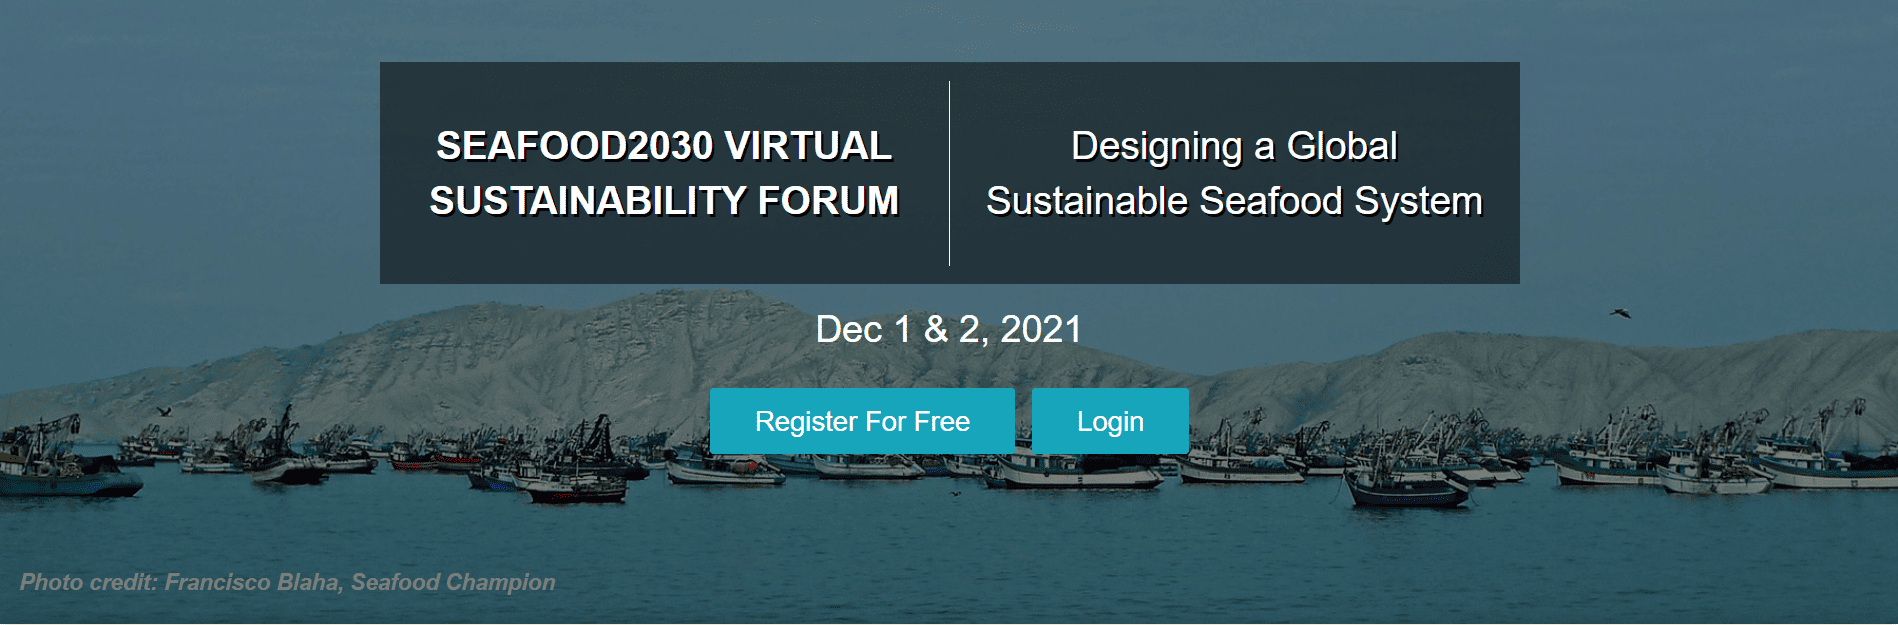 Seafood2030 virtual event